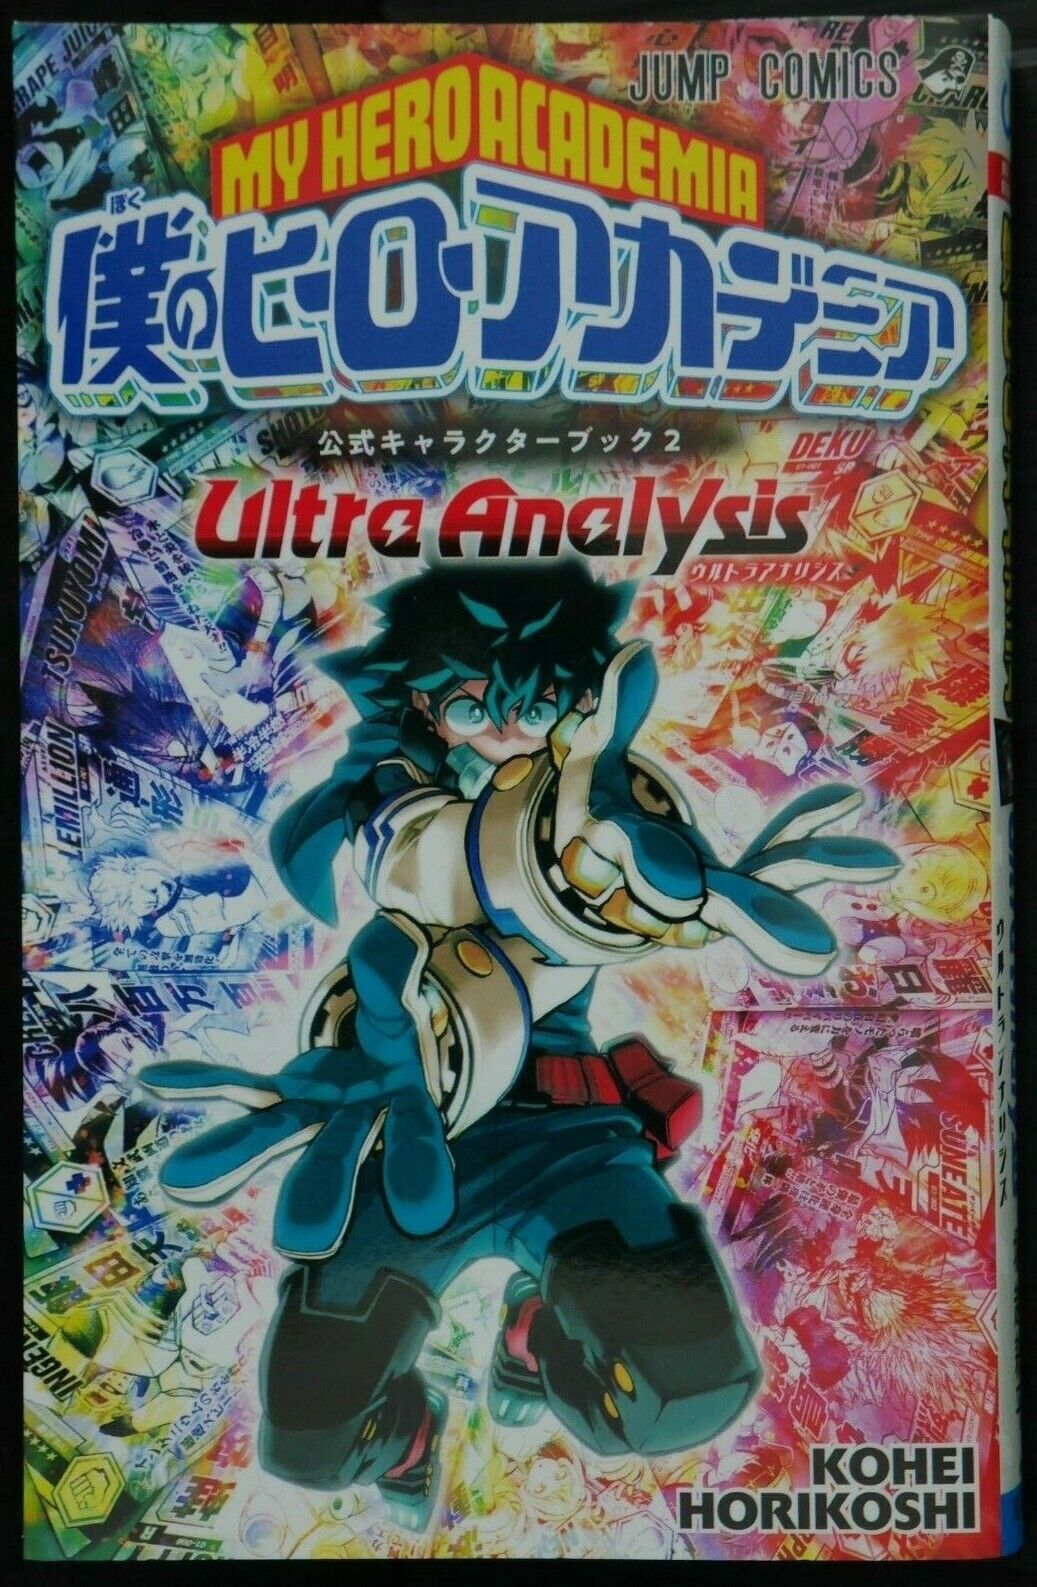 JAPAN Kouhei Horikoshi My Hero Academia Official Character Book 2 Ultra Analysis